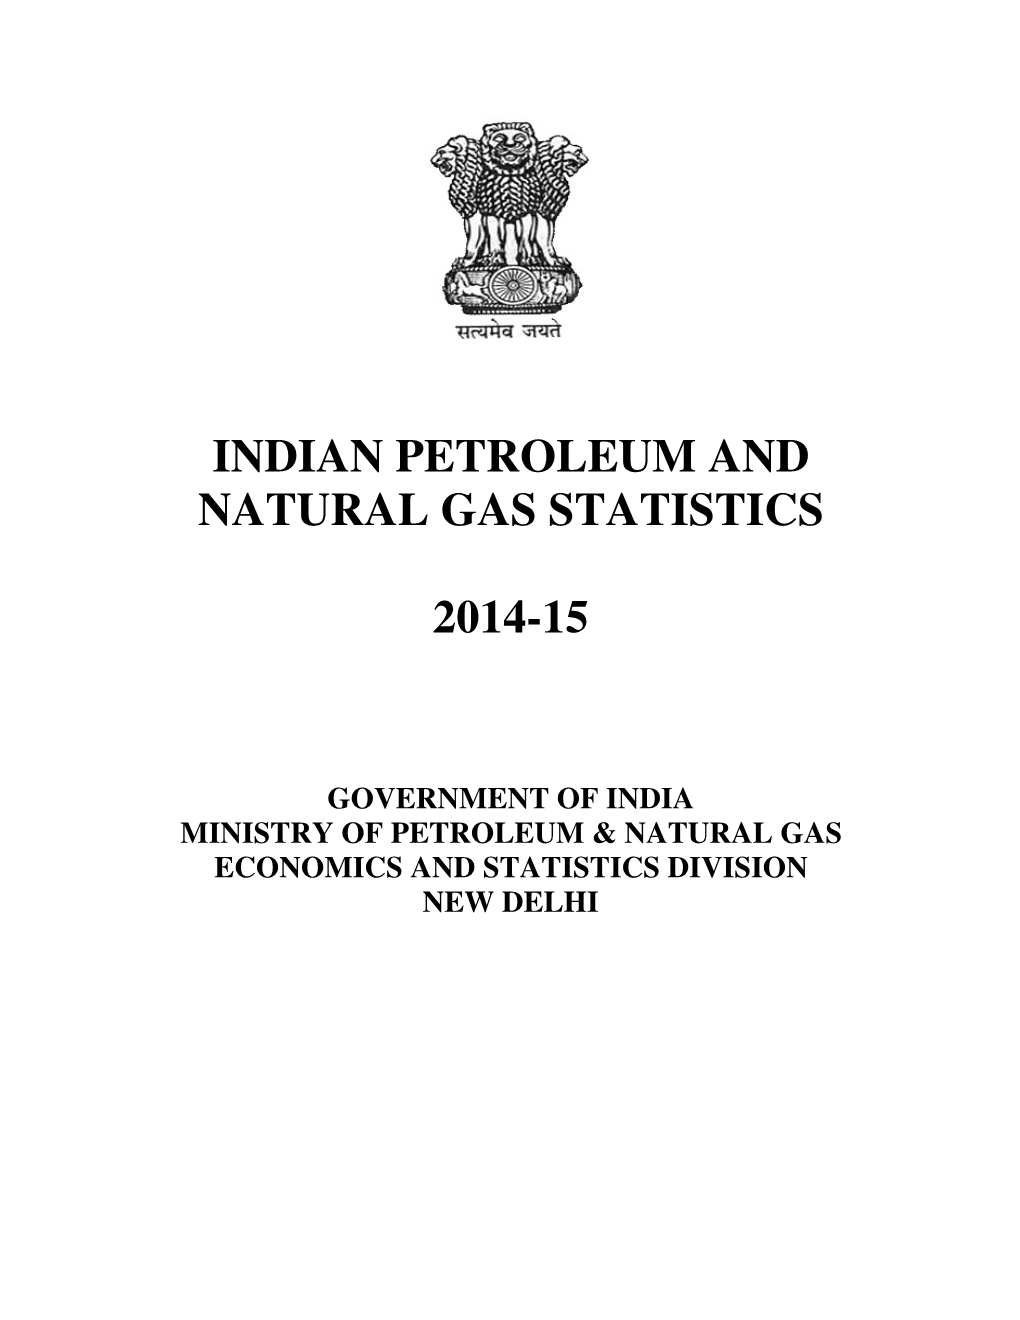 Indian Petroleum and Natural Gas Statistics 2014-15